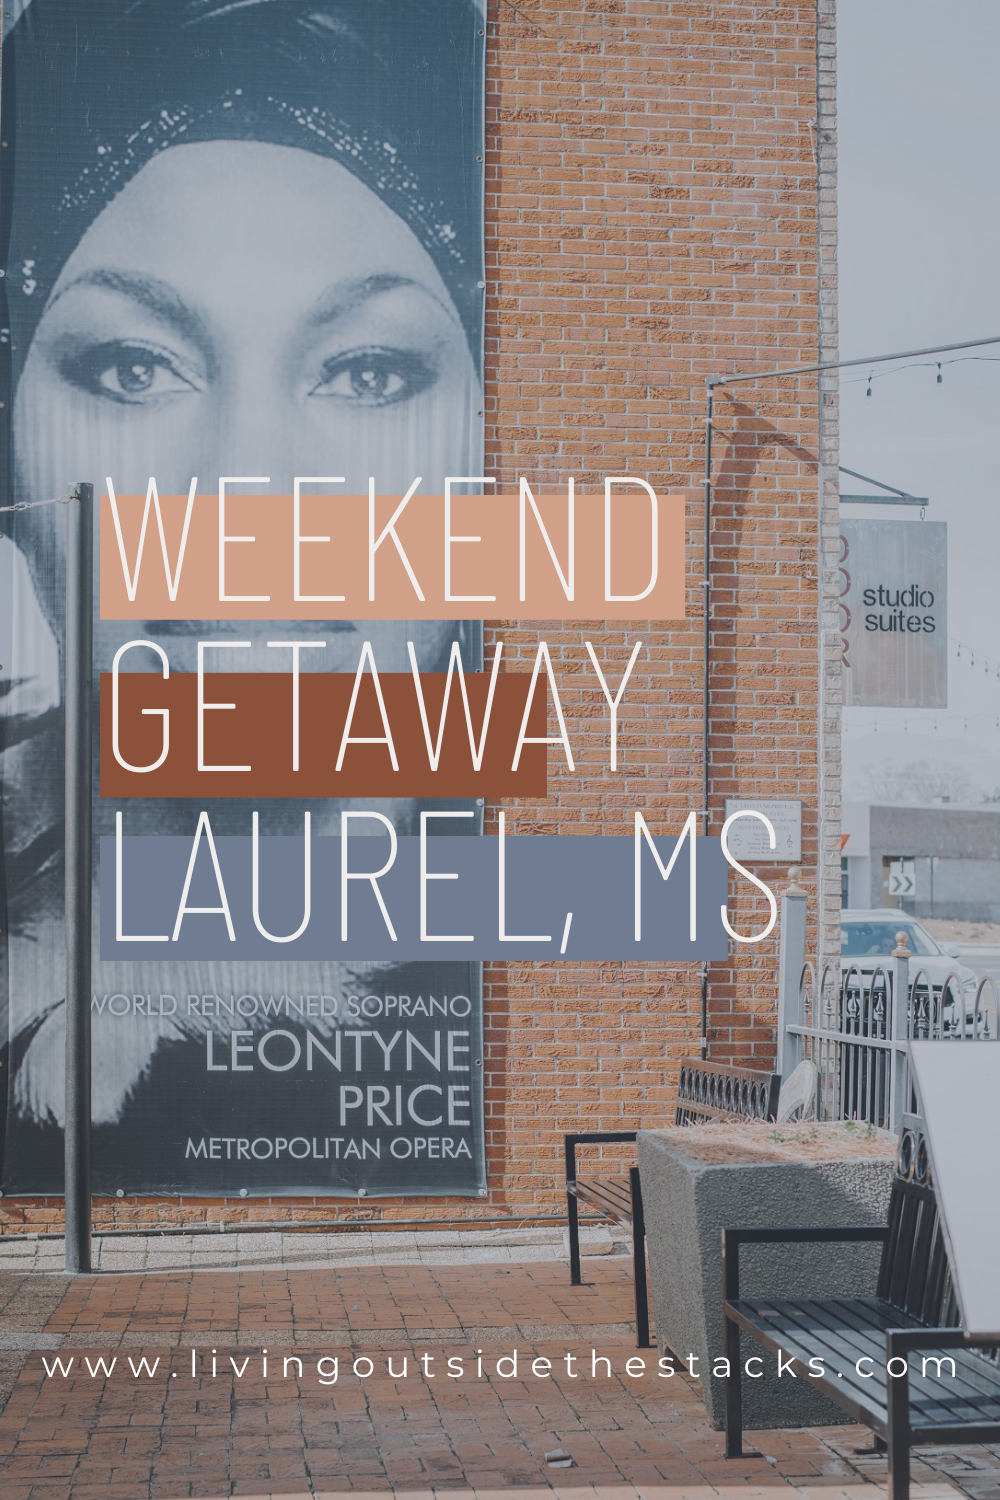 Weekend Getaway Laurel MS {living outside the stacks} Follow @DaenelT on Instagram